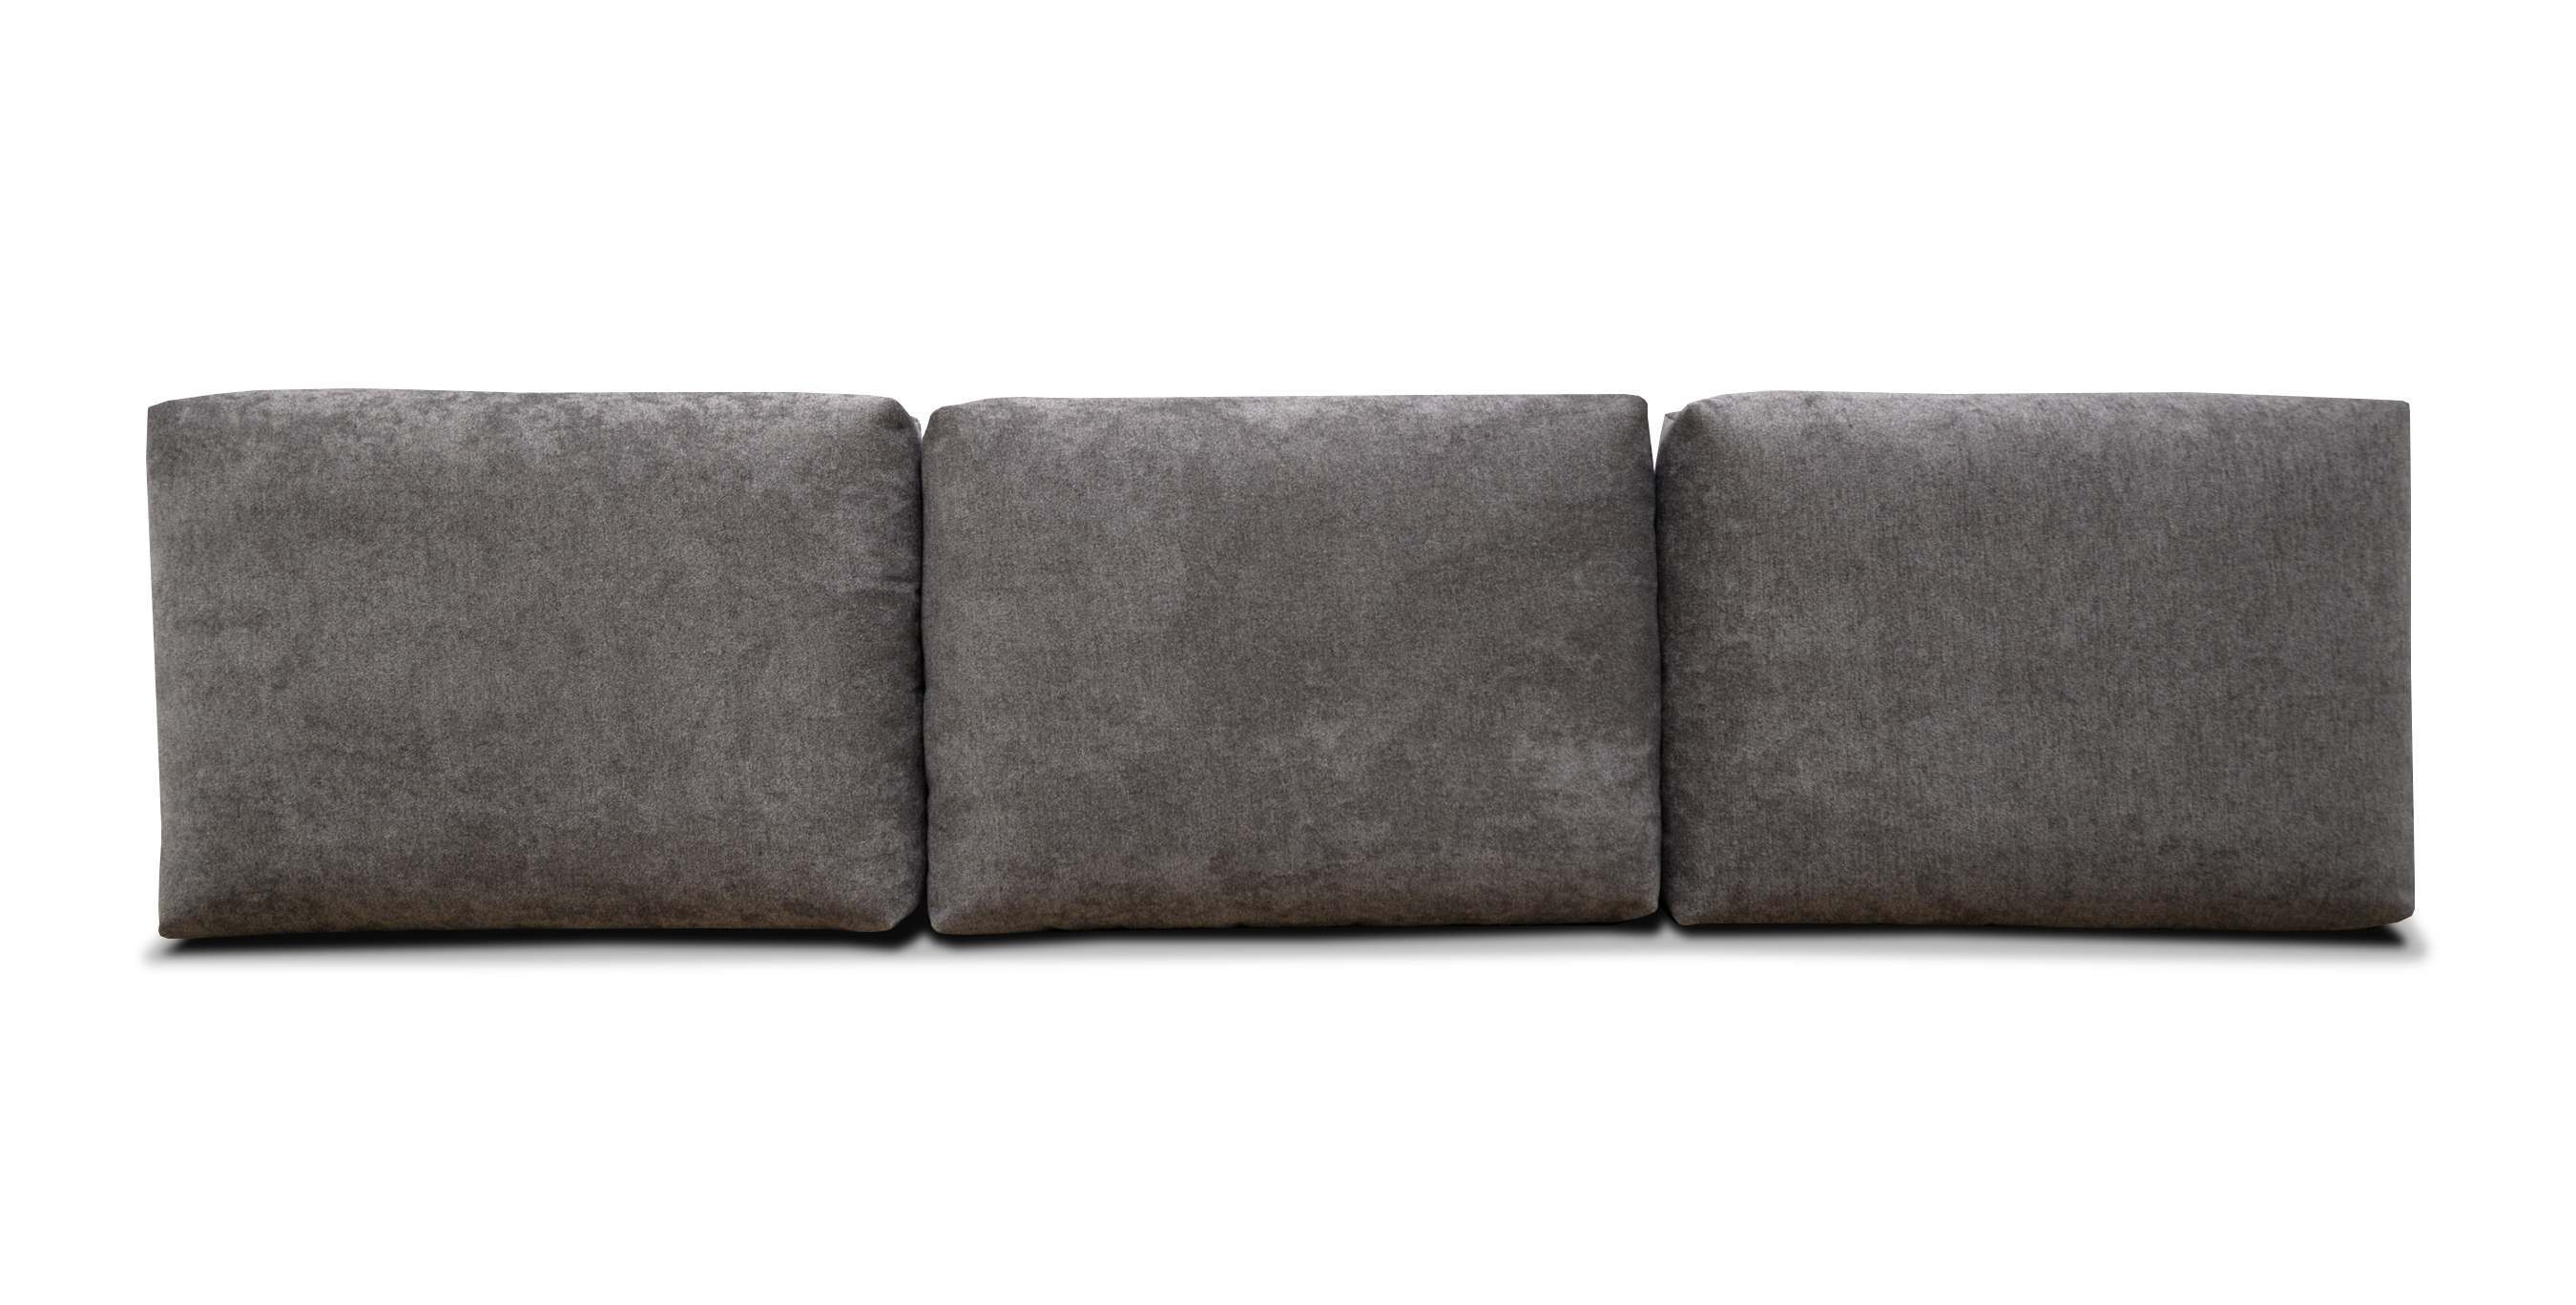 формованные подушки для дивана